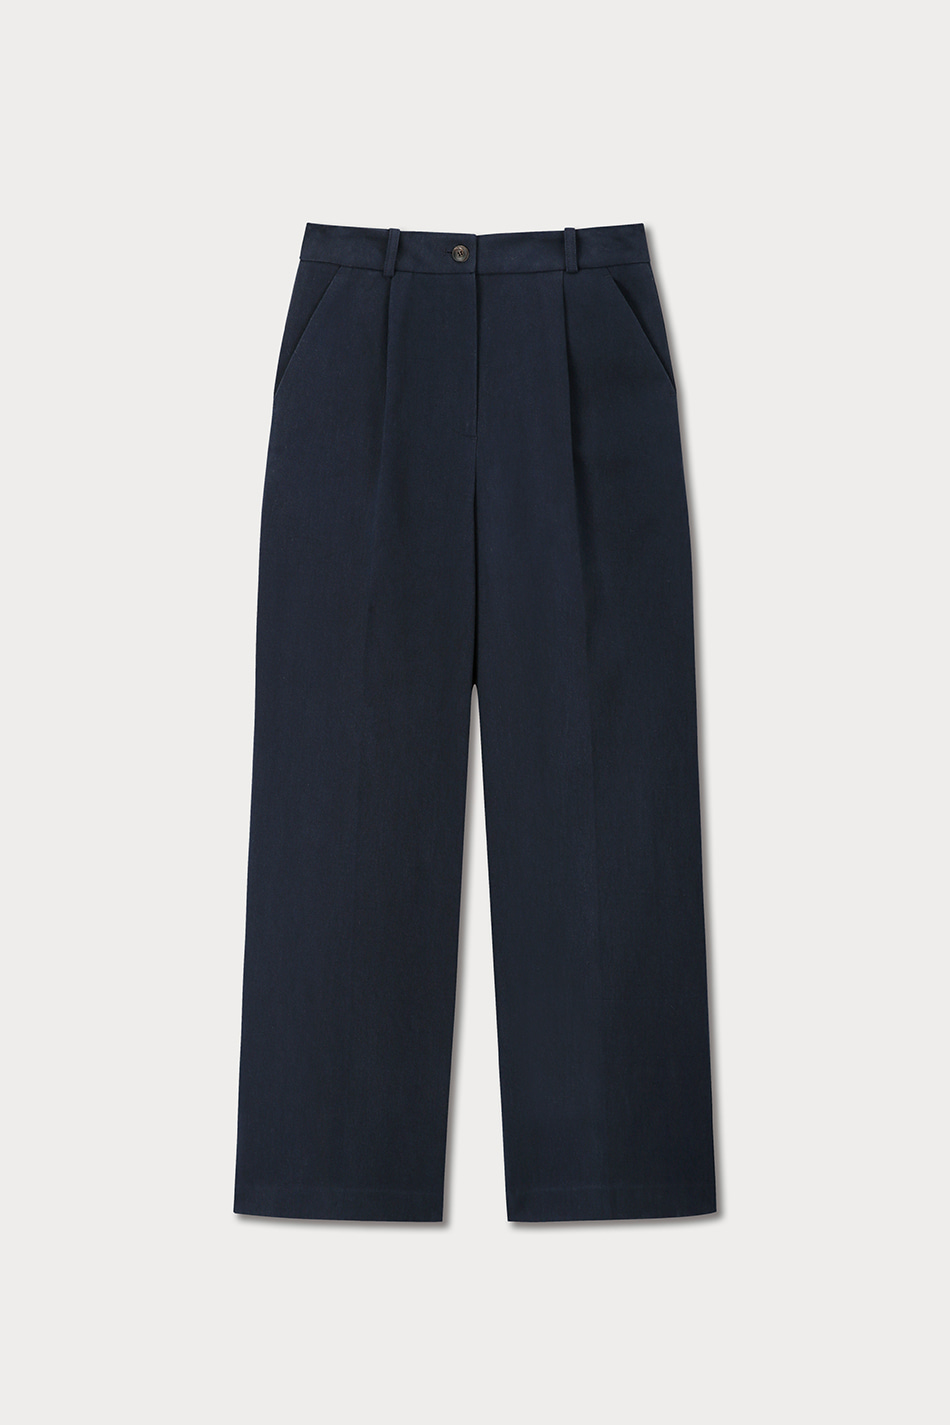 Nes Cotton Pants (Navy)